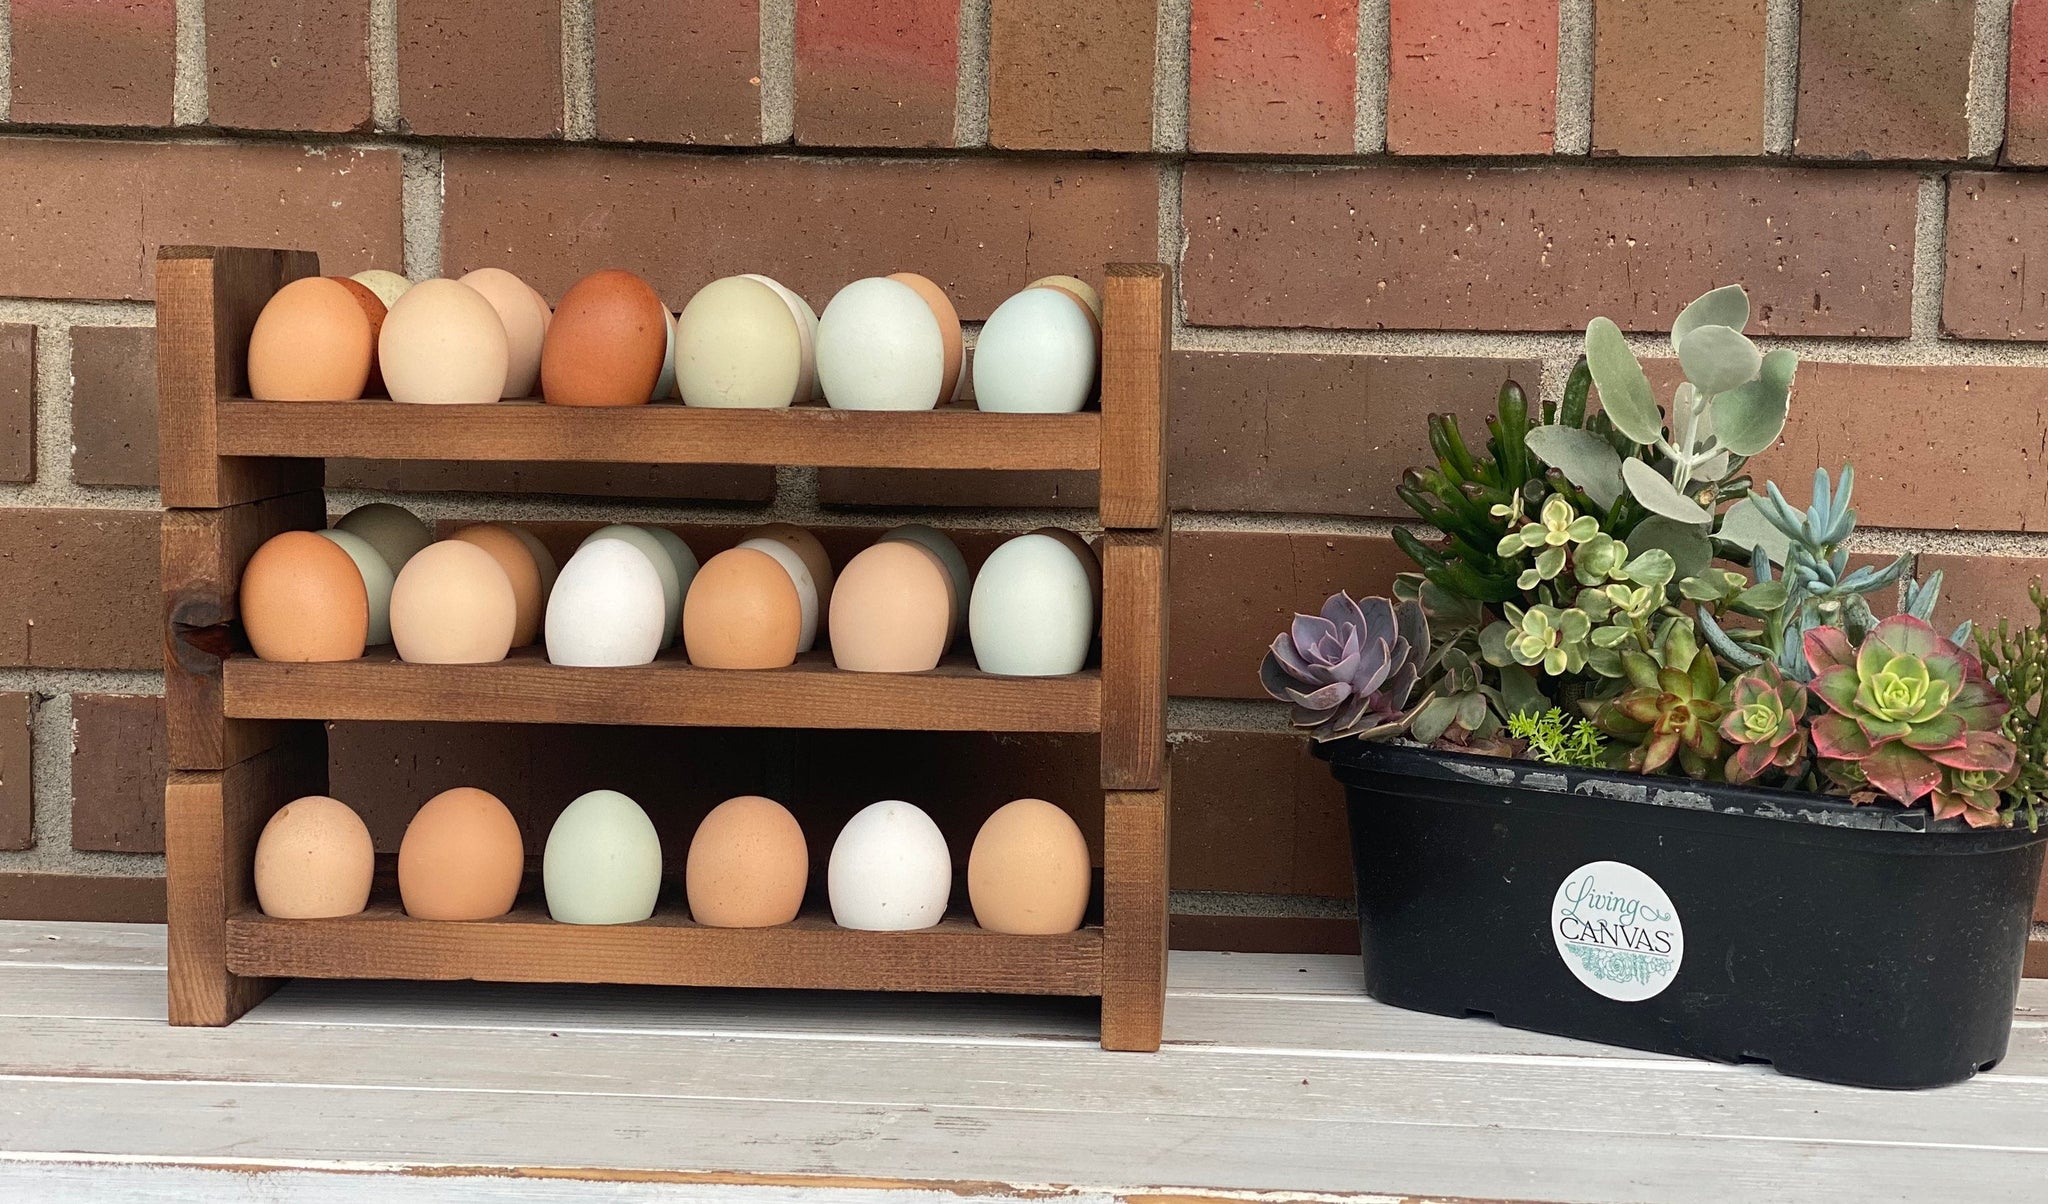  Forzater Wooden Egg Holder Countertop, Stackable Egg